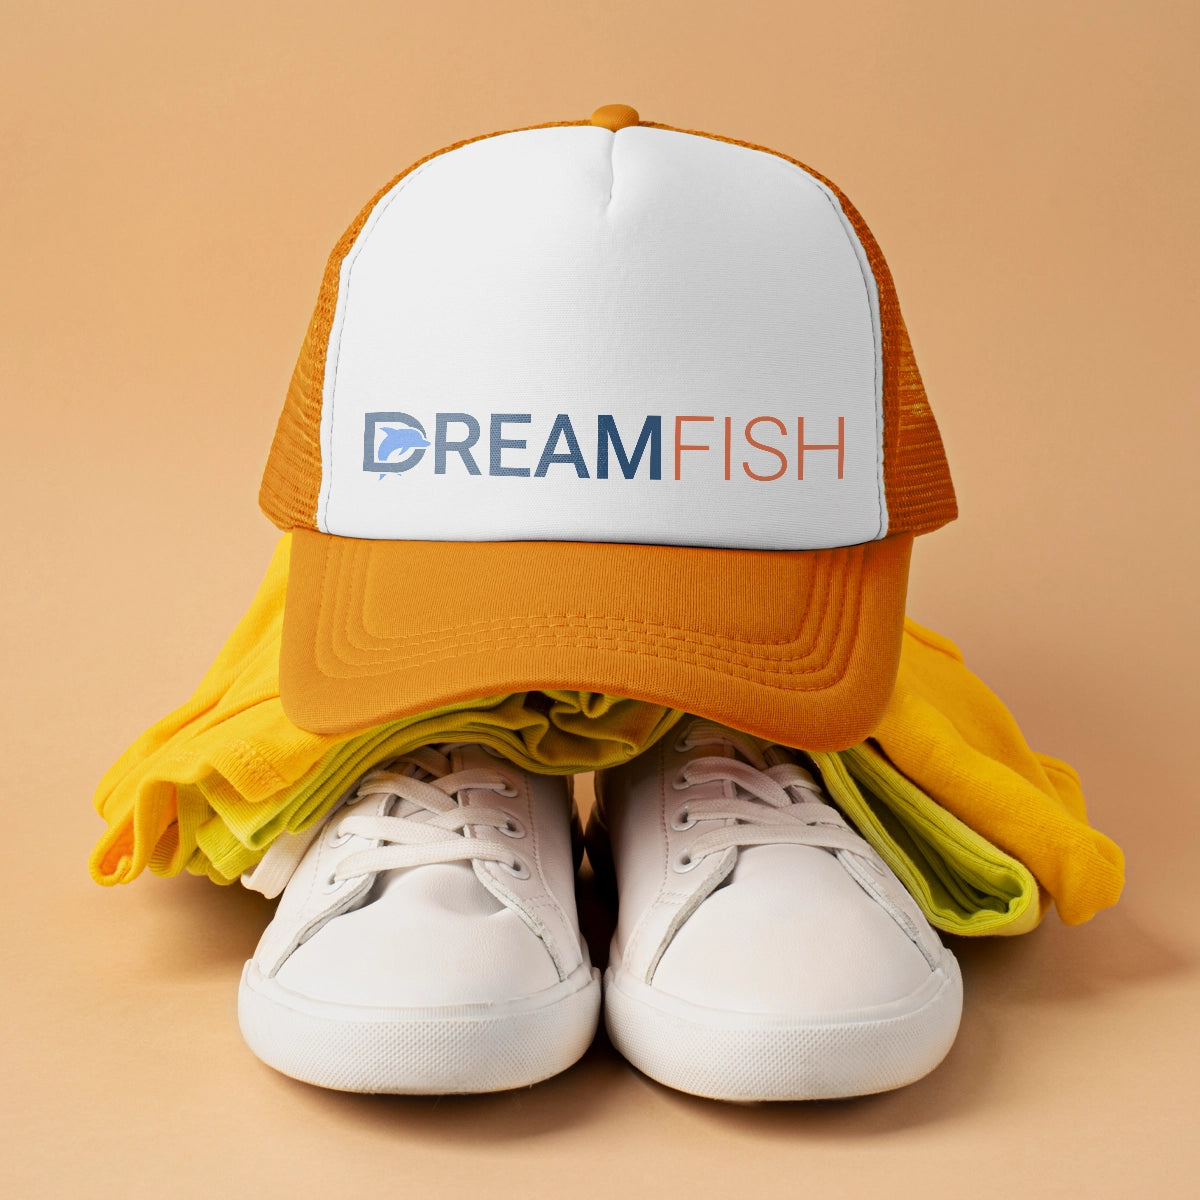 Dreamfish.com